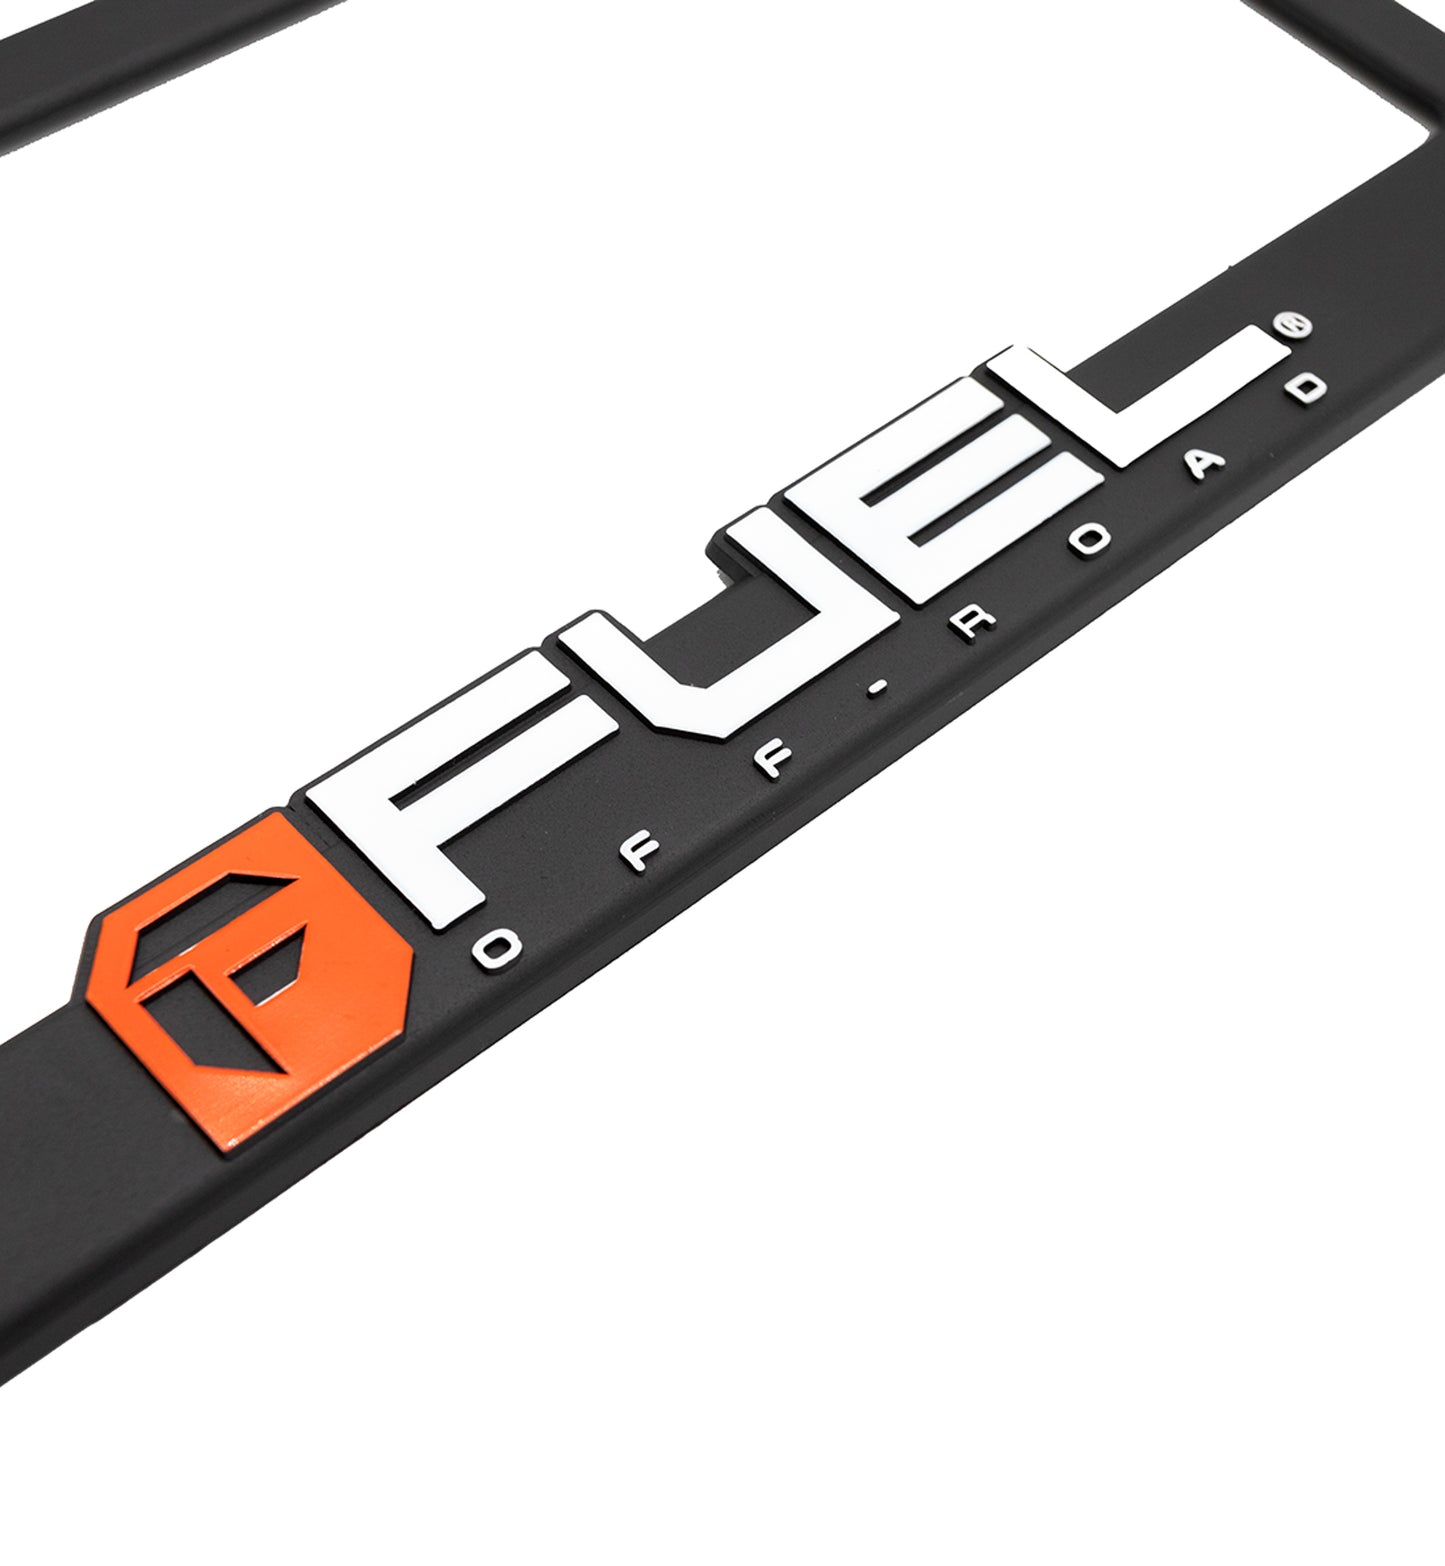 Fuel OFF-ROAD Plate Frame